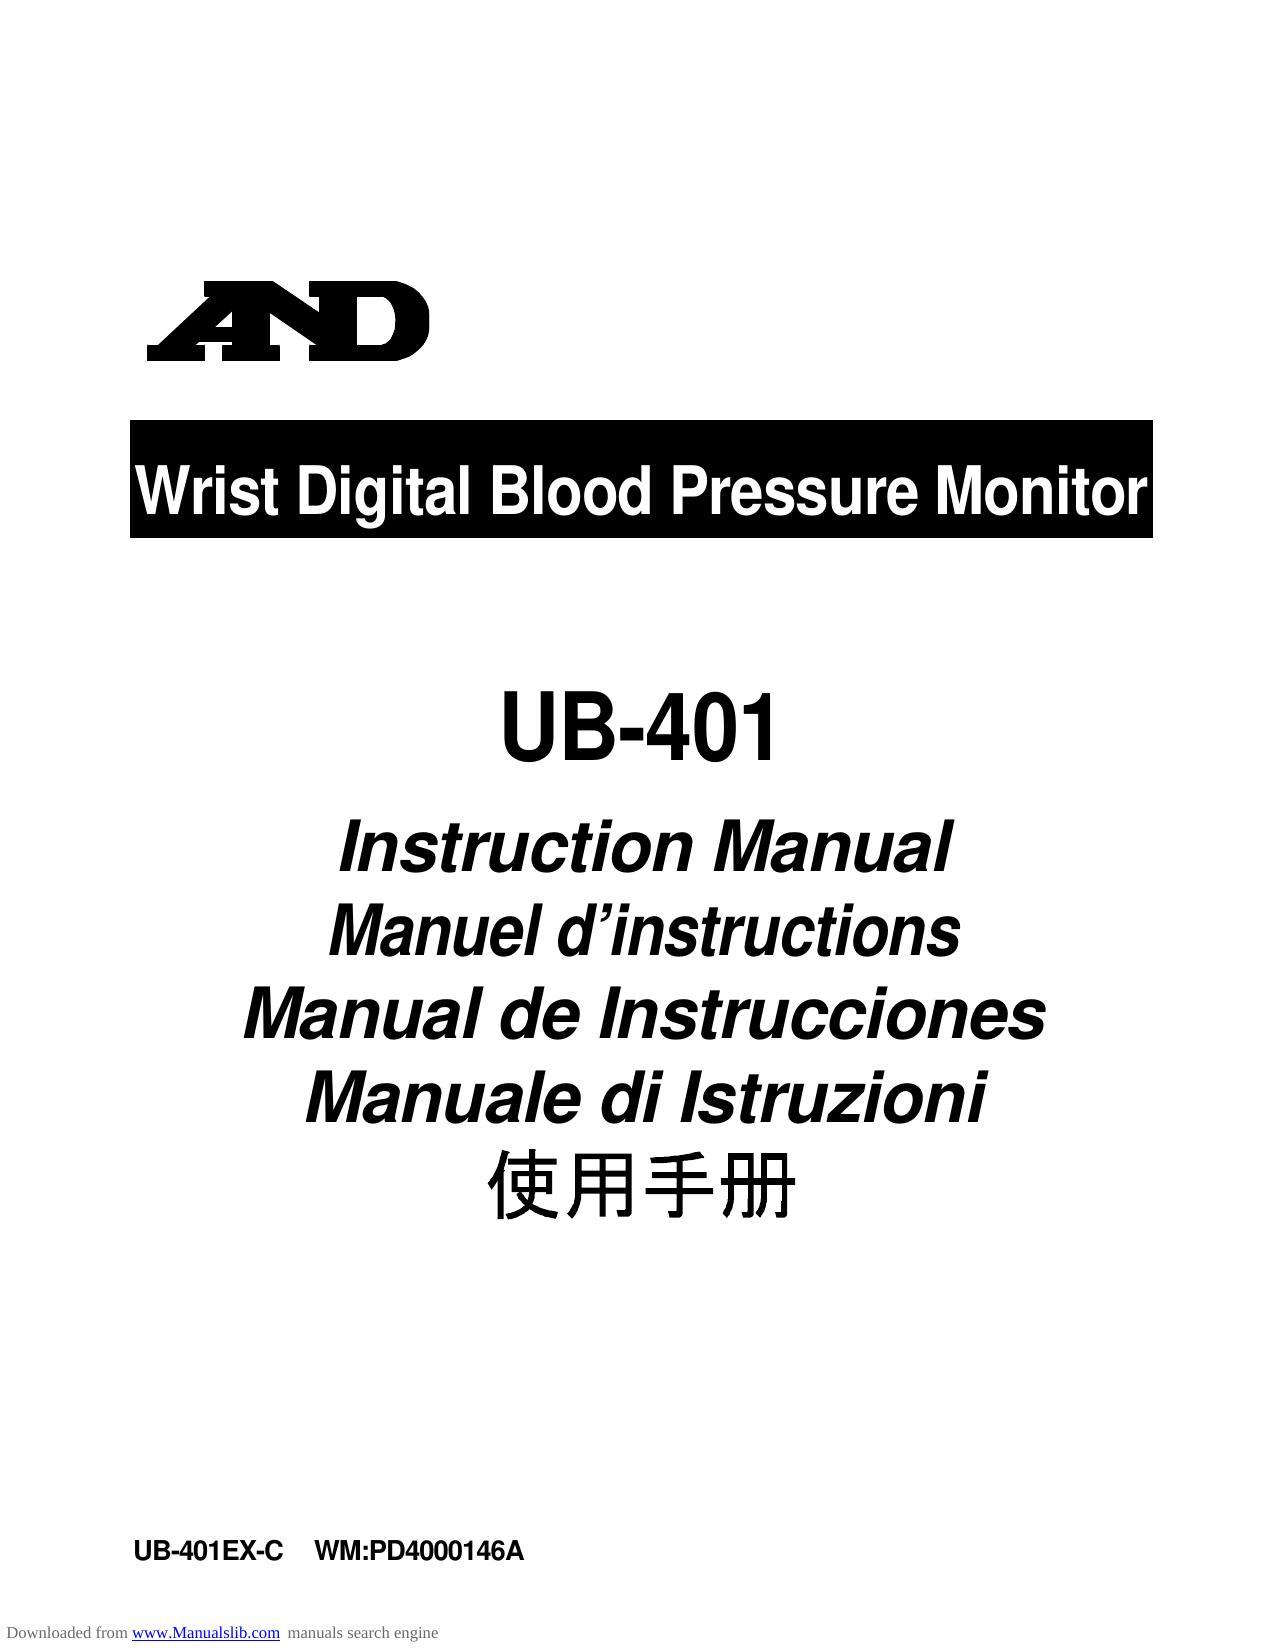 wrist-digital-blood-pressure-monitor-ub-401-instruction-manual.pdf